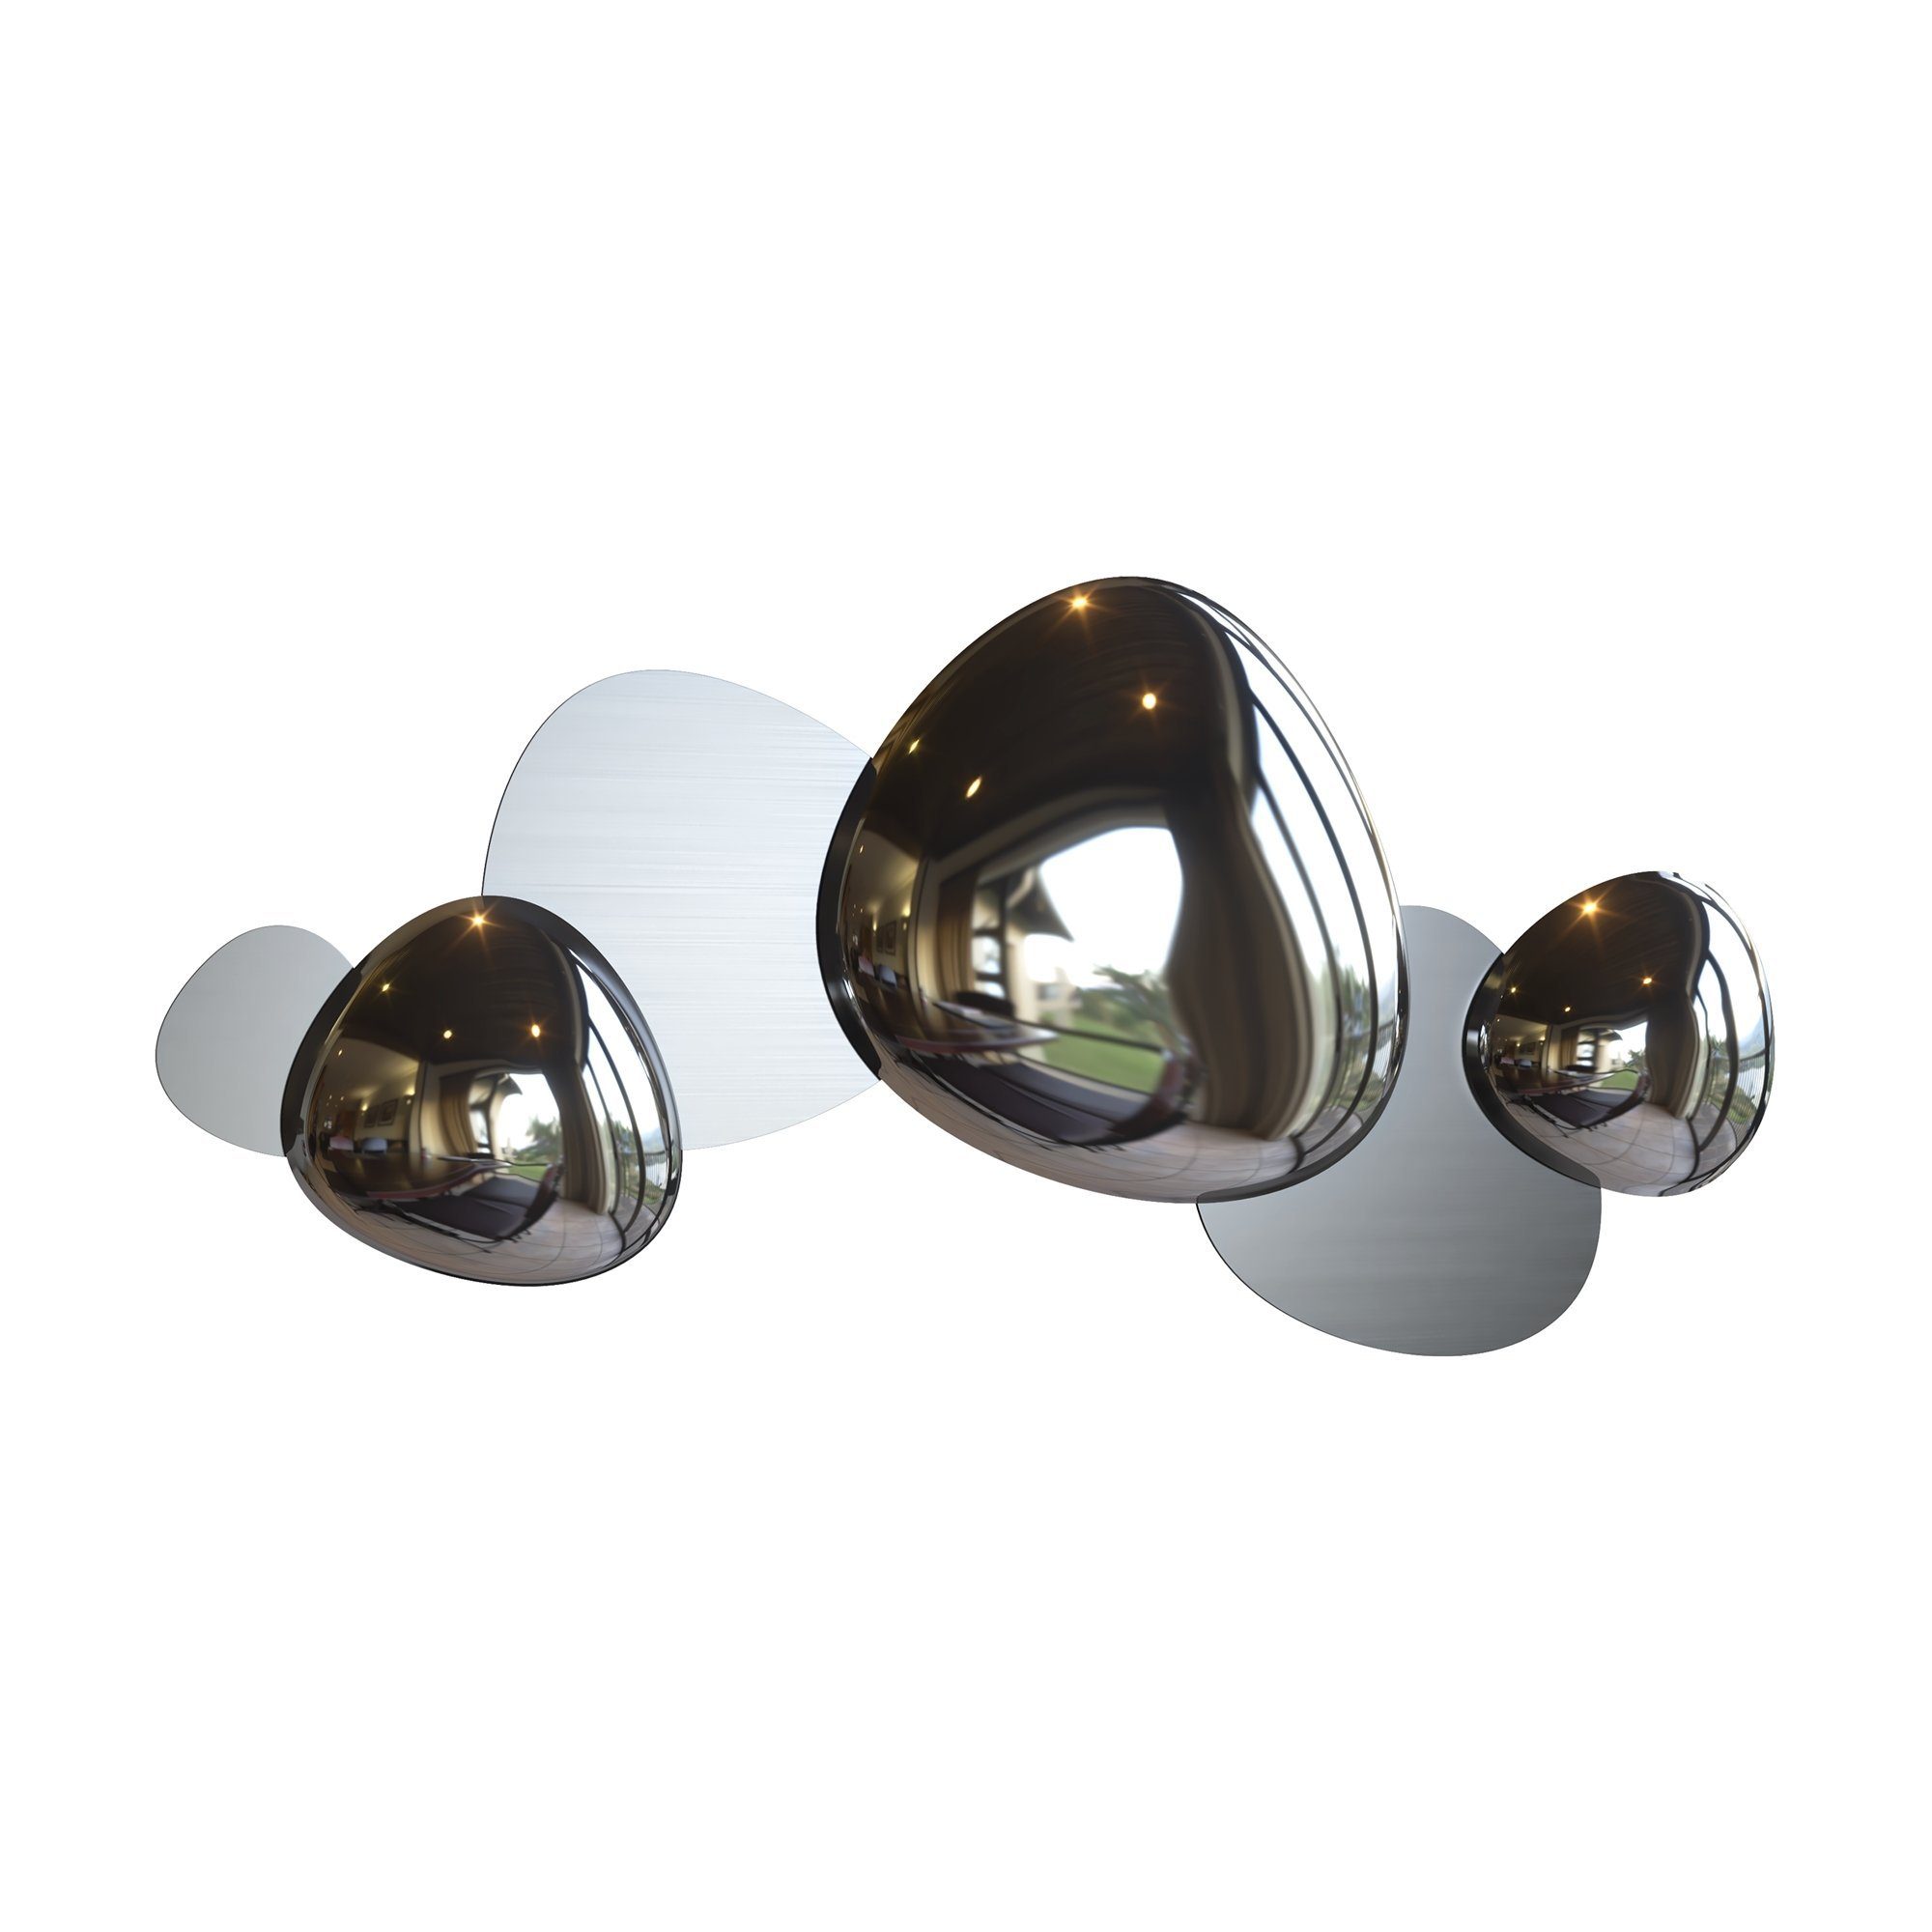 MAYTONI DECORATIVE LIGHTING Wandleuchte Jack-stone 3 79x37.1x7.4 cm, LED fest integriert, hochwertige Design Lampe & dekoratives Raumobjekt